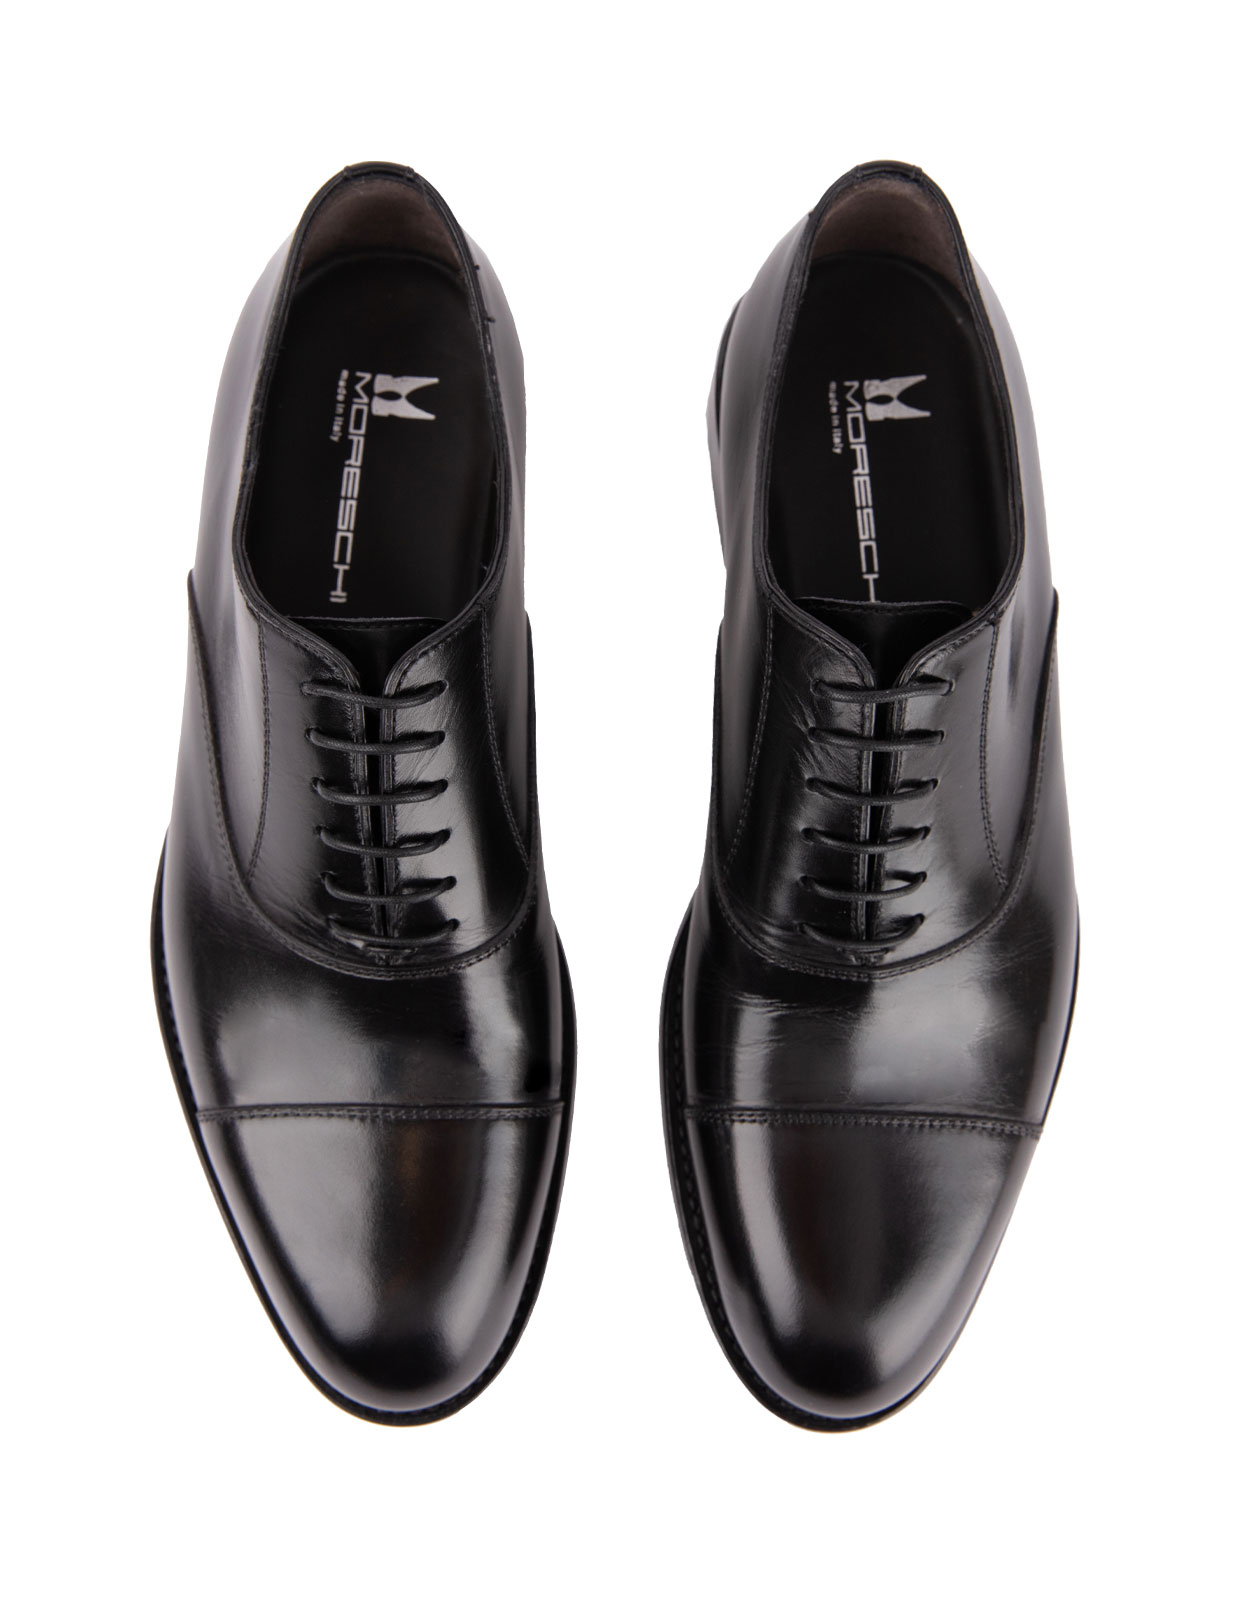 Cleveland Oxford Shoes Black Stl 8